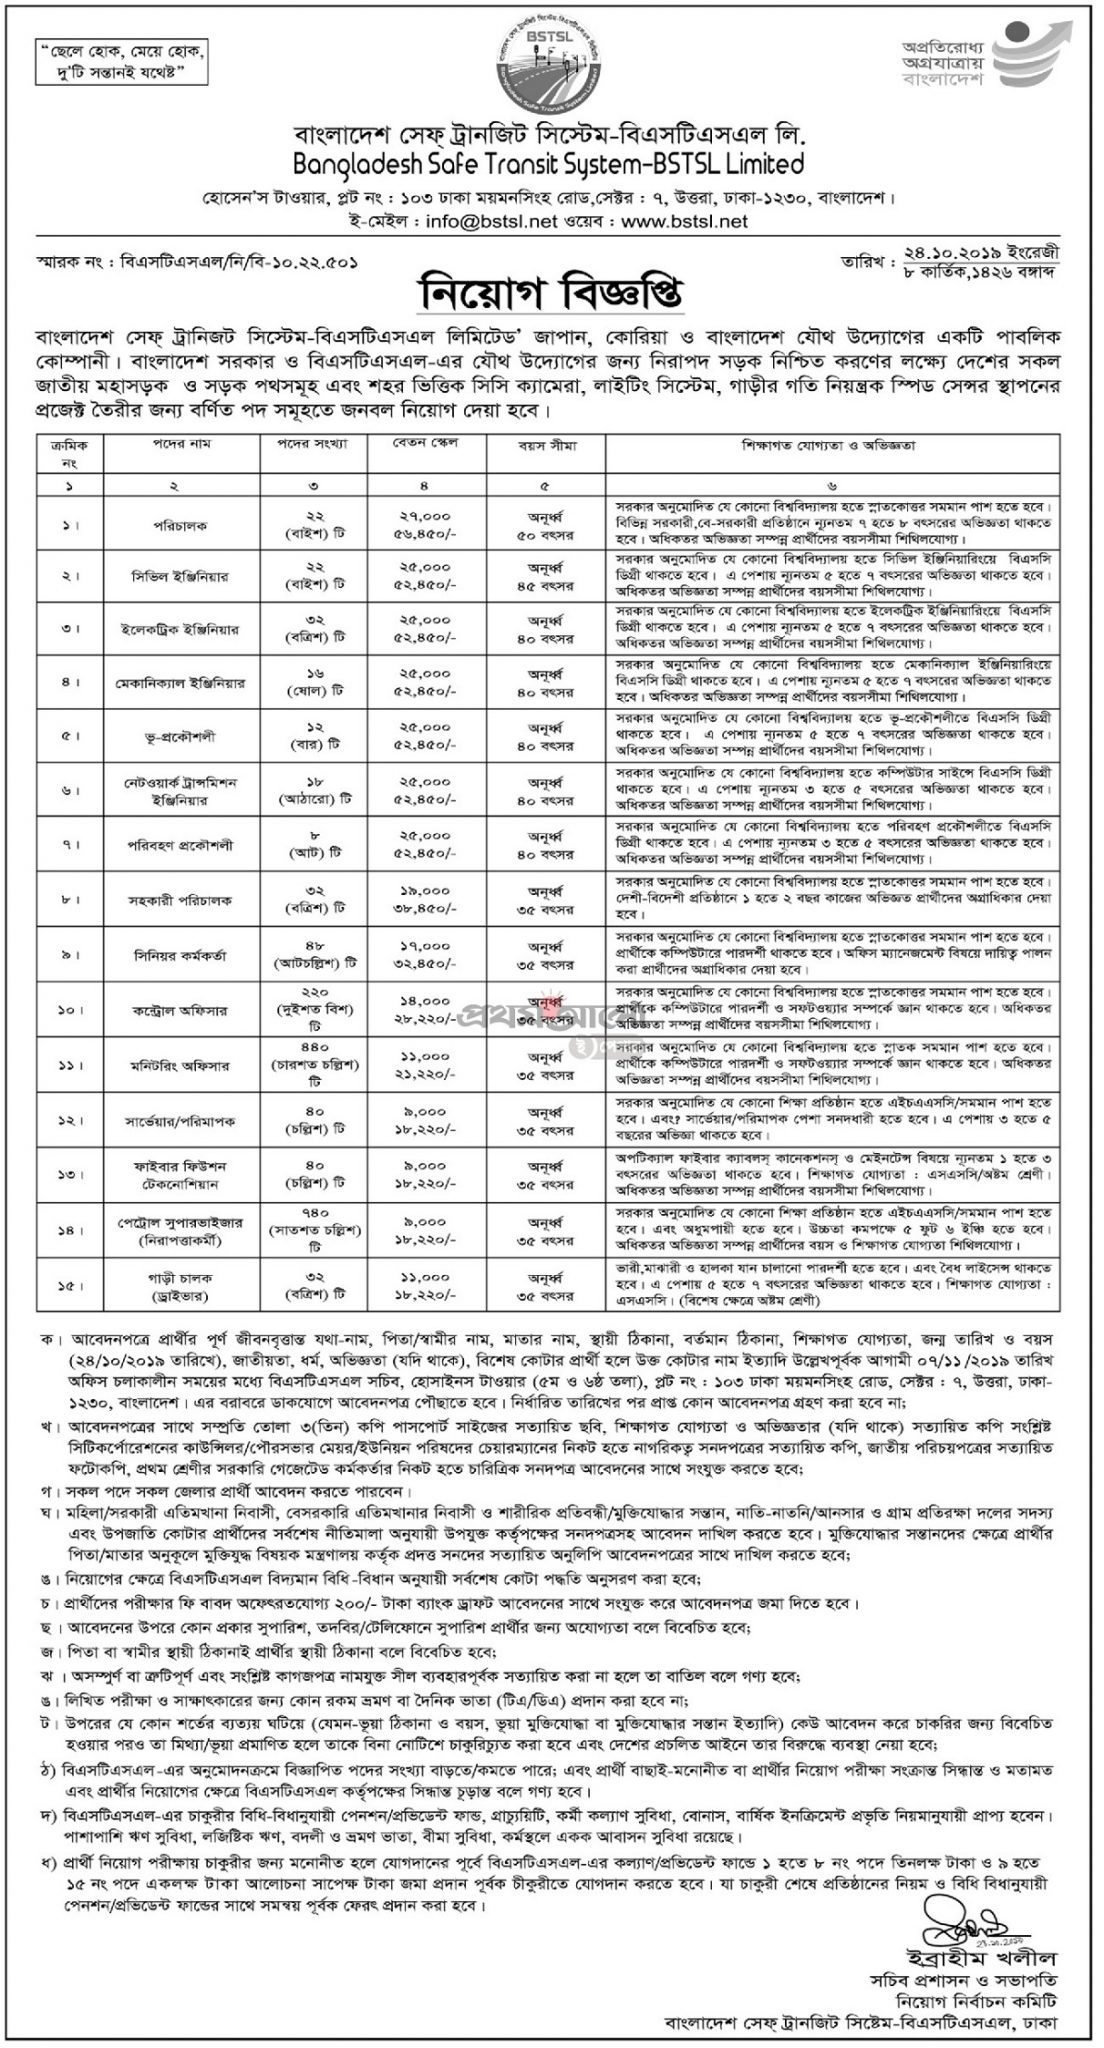 Bangladesh Safe Transit System (BSTSL) Limited Job Circular 2019